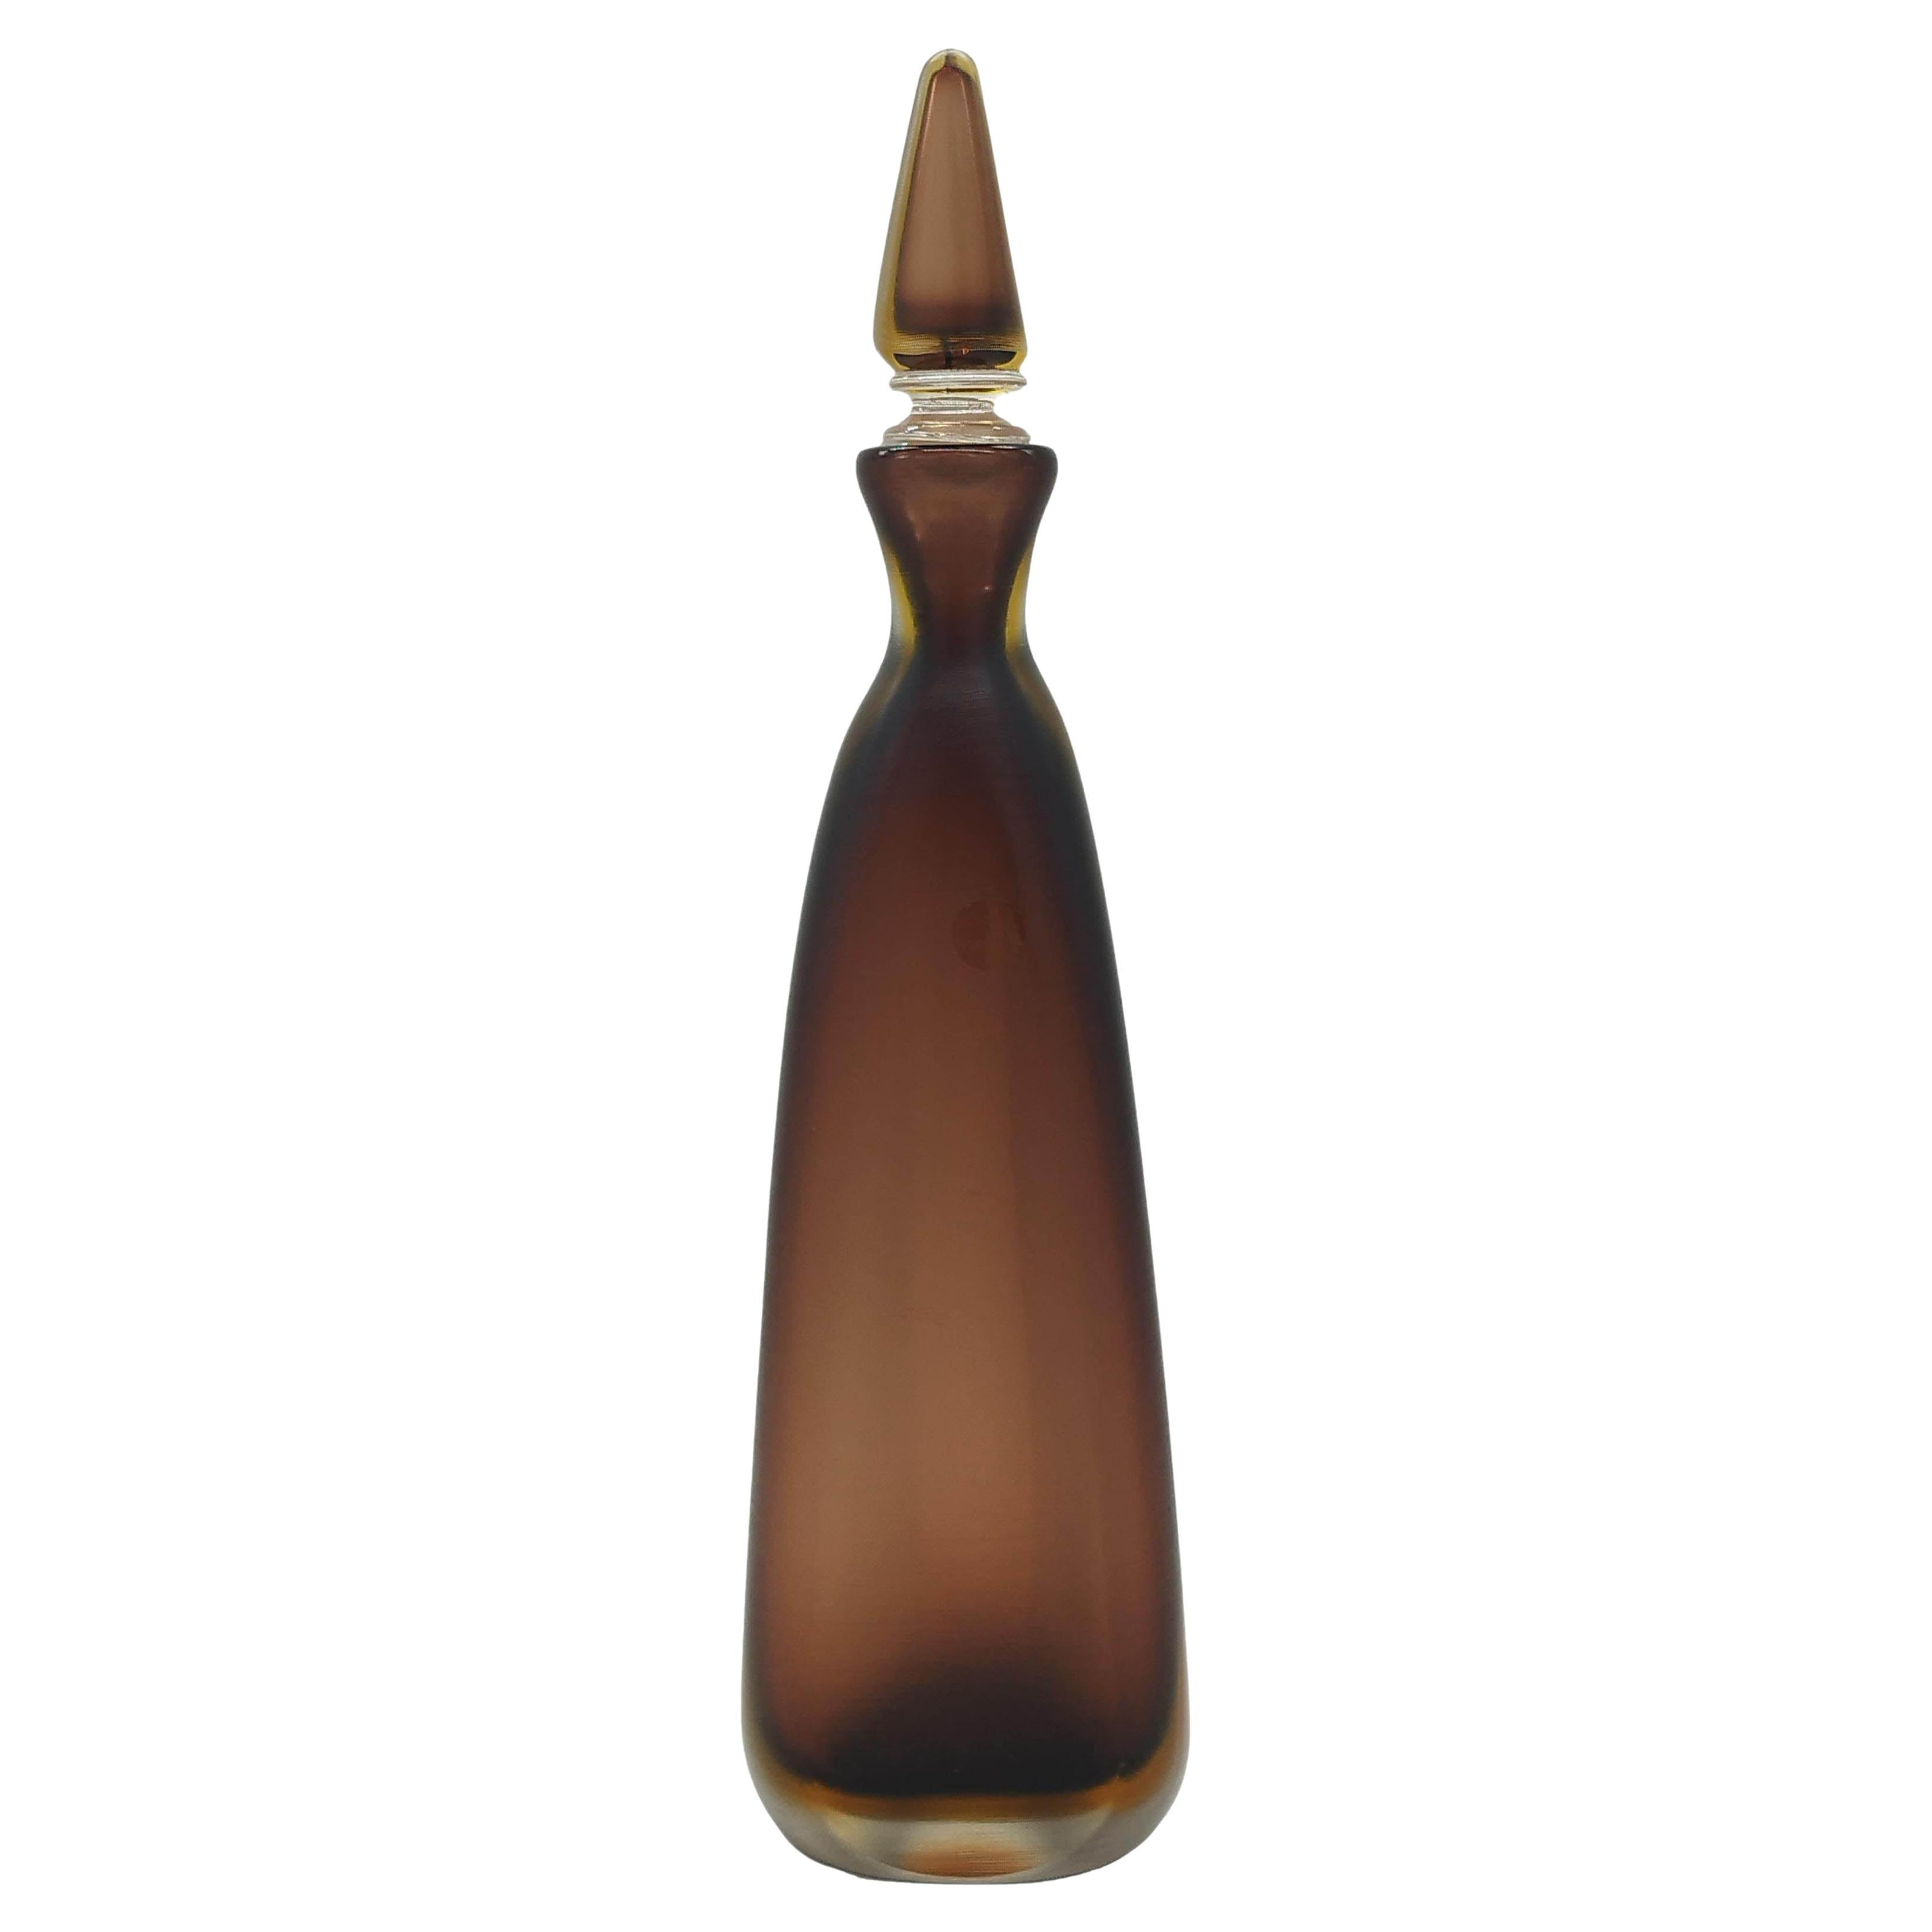 Paolo Venini "Bottiglie Incise" Prune Glass Bottle, Italy, 1985 For Sale